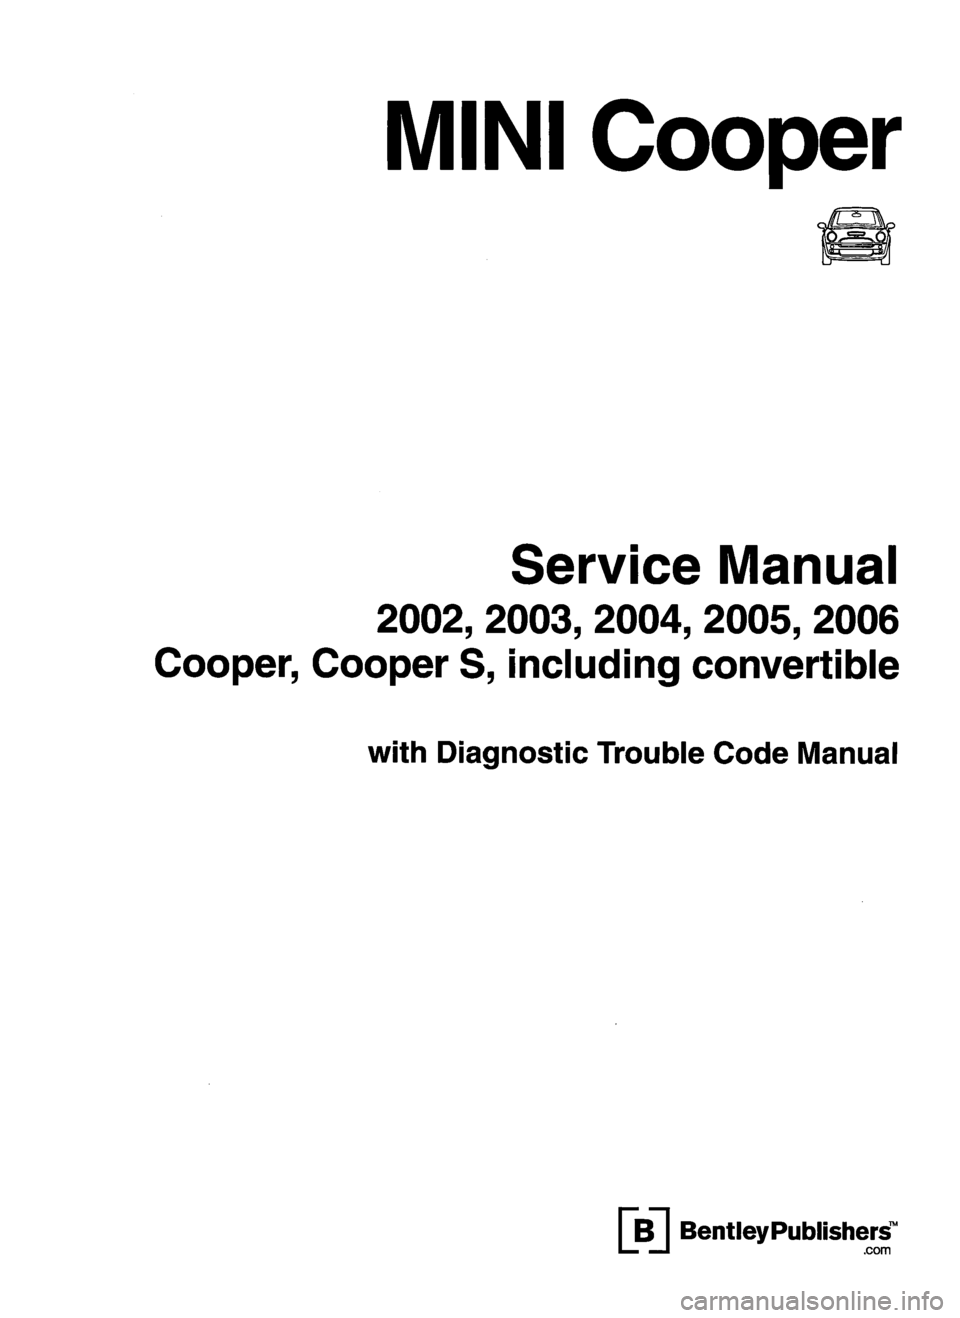 MINI COOPER 2002  Service Repair Manual MINI Cooper
Service Manual
2002, 2003, 2004, 2005, 2006
Cooper,  Cooper  S,  including  convertible
with Diagnostic Trouble Code Manual
B  BentleyPublishers.com 